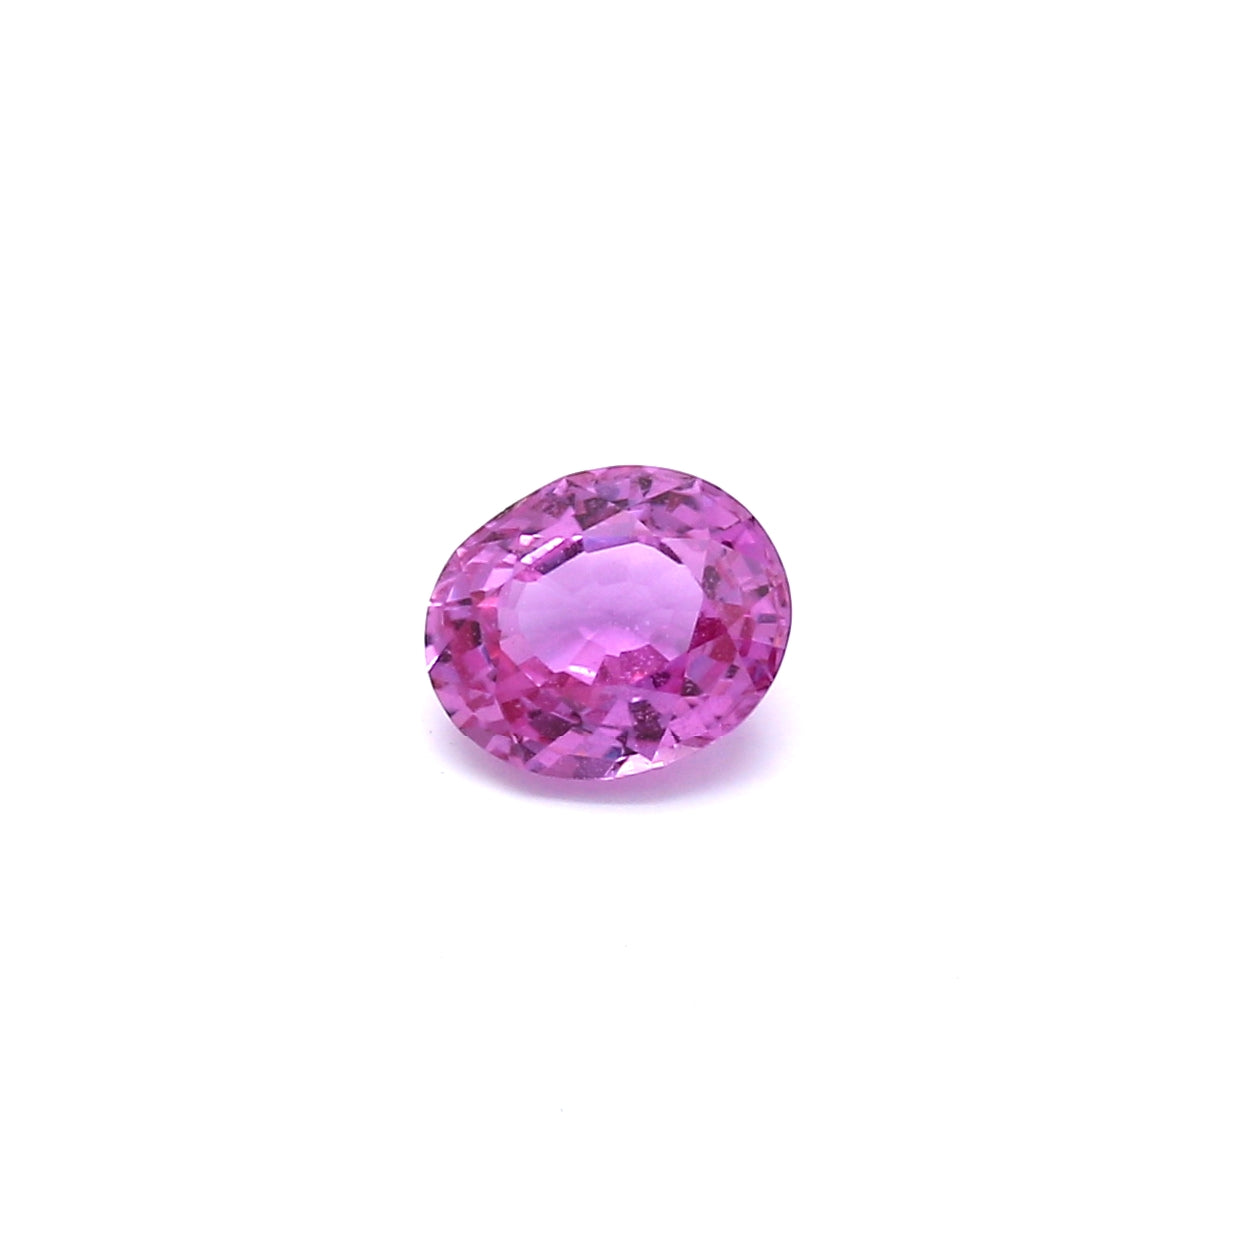 1.03ct Purplish Pink, Oval Sapphire, No Heat, Madagascar - 6.47 x 5.44 x 3.43mm